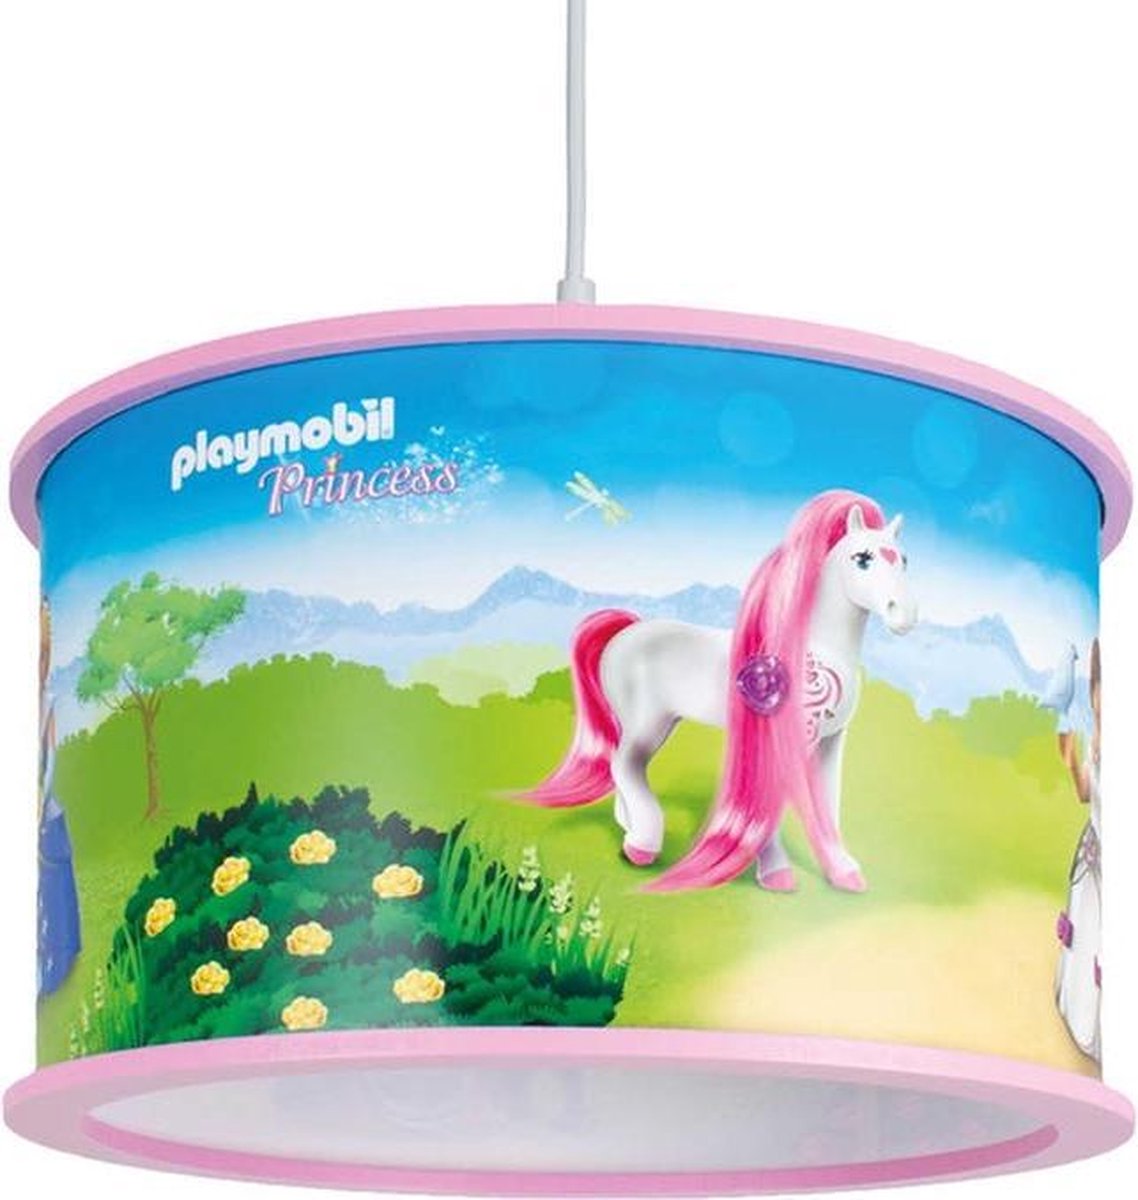 Kinderkamer - Plafond / Hanglamp - Playmobil Princess